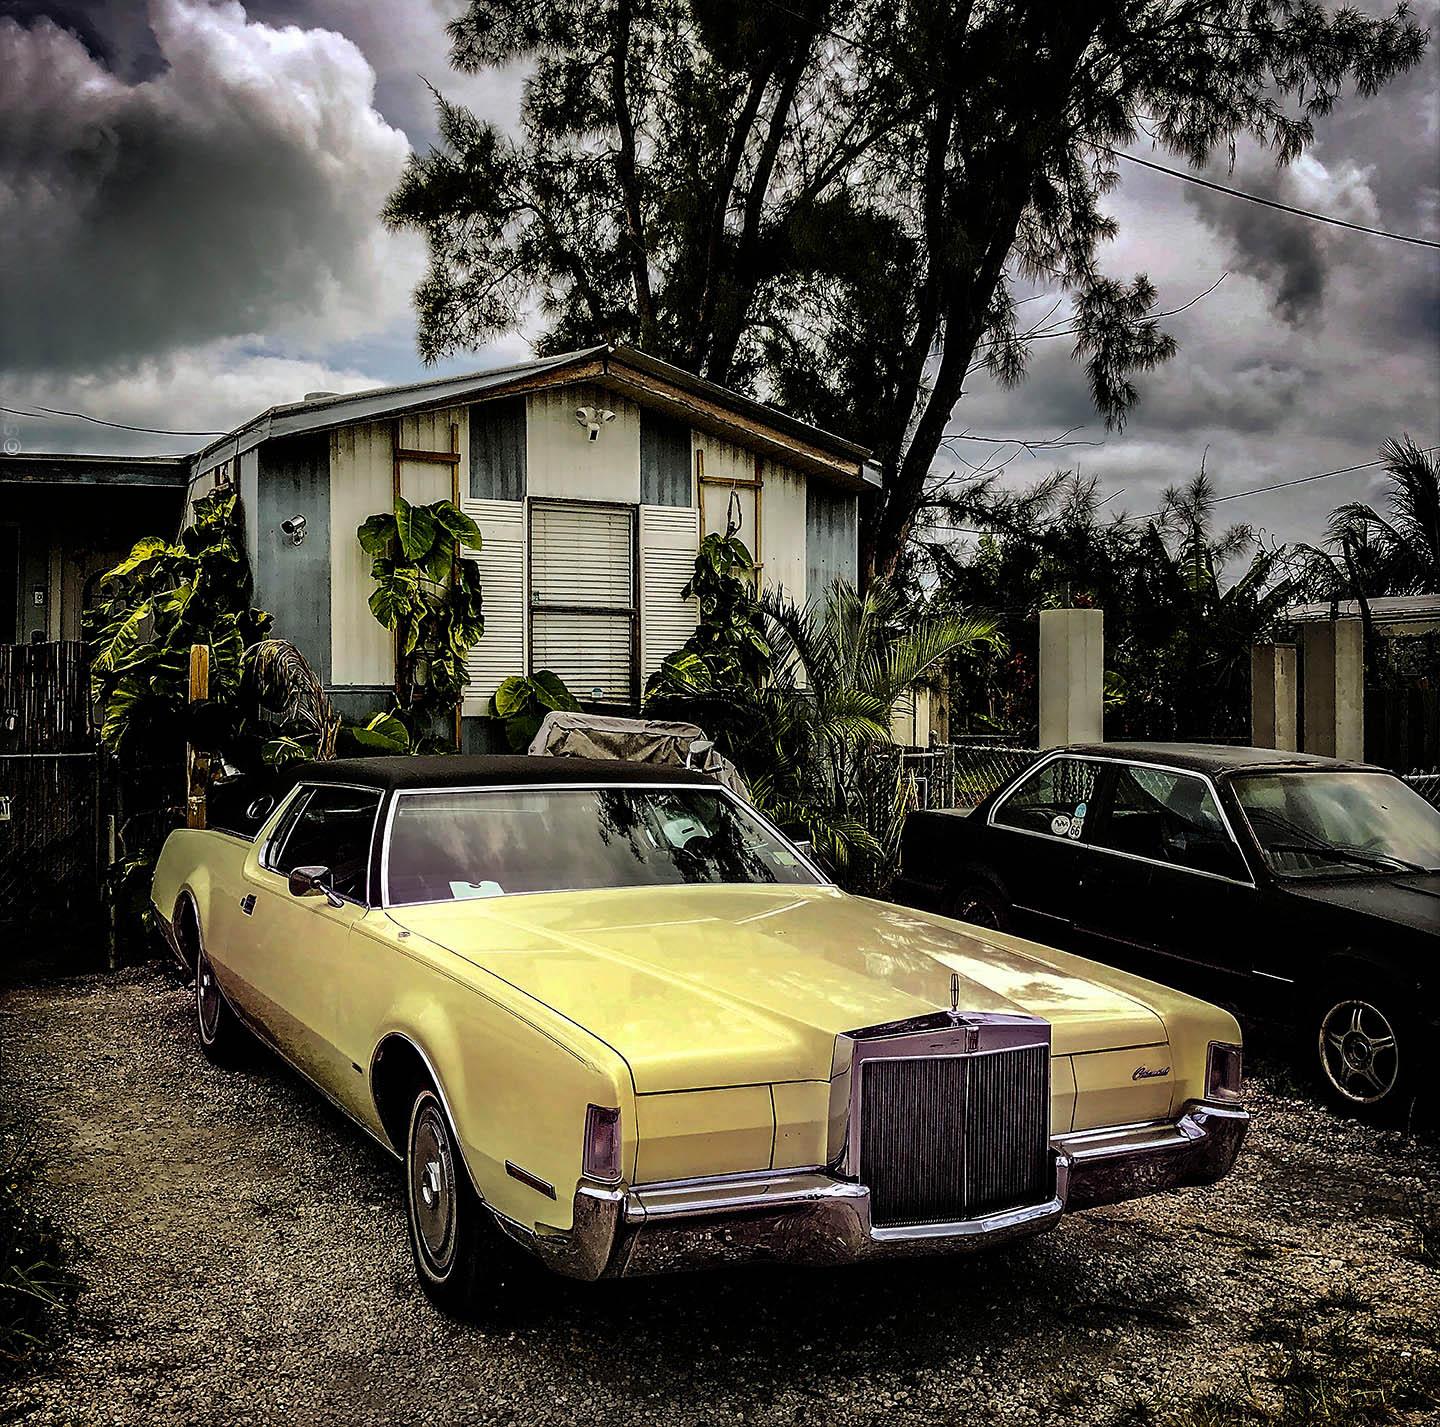 Lincoln (Key West), Sally Davies